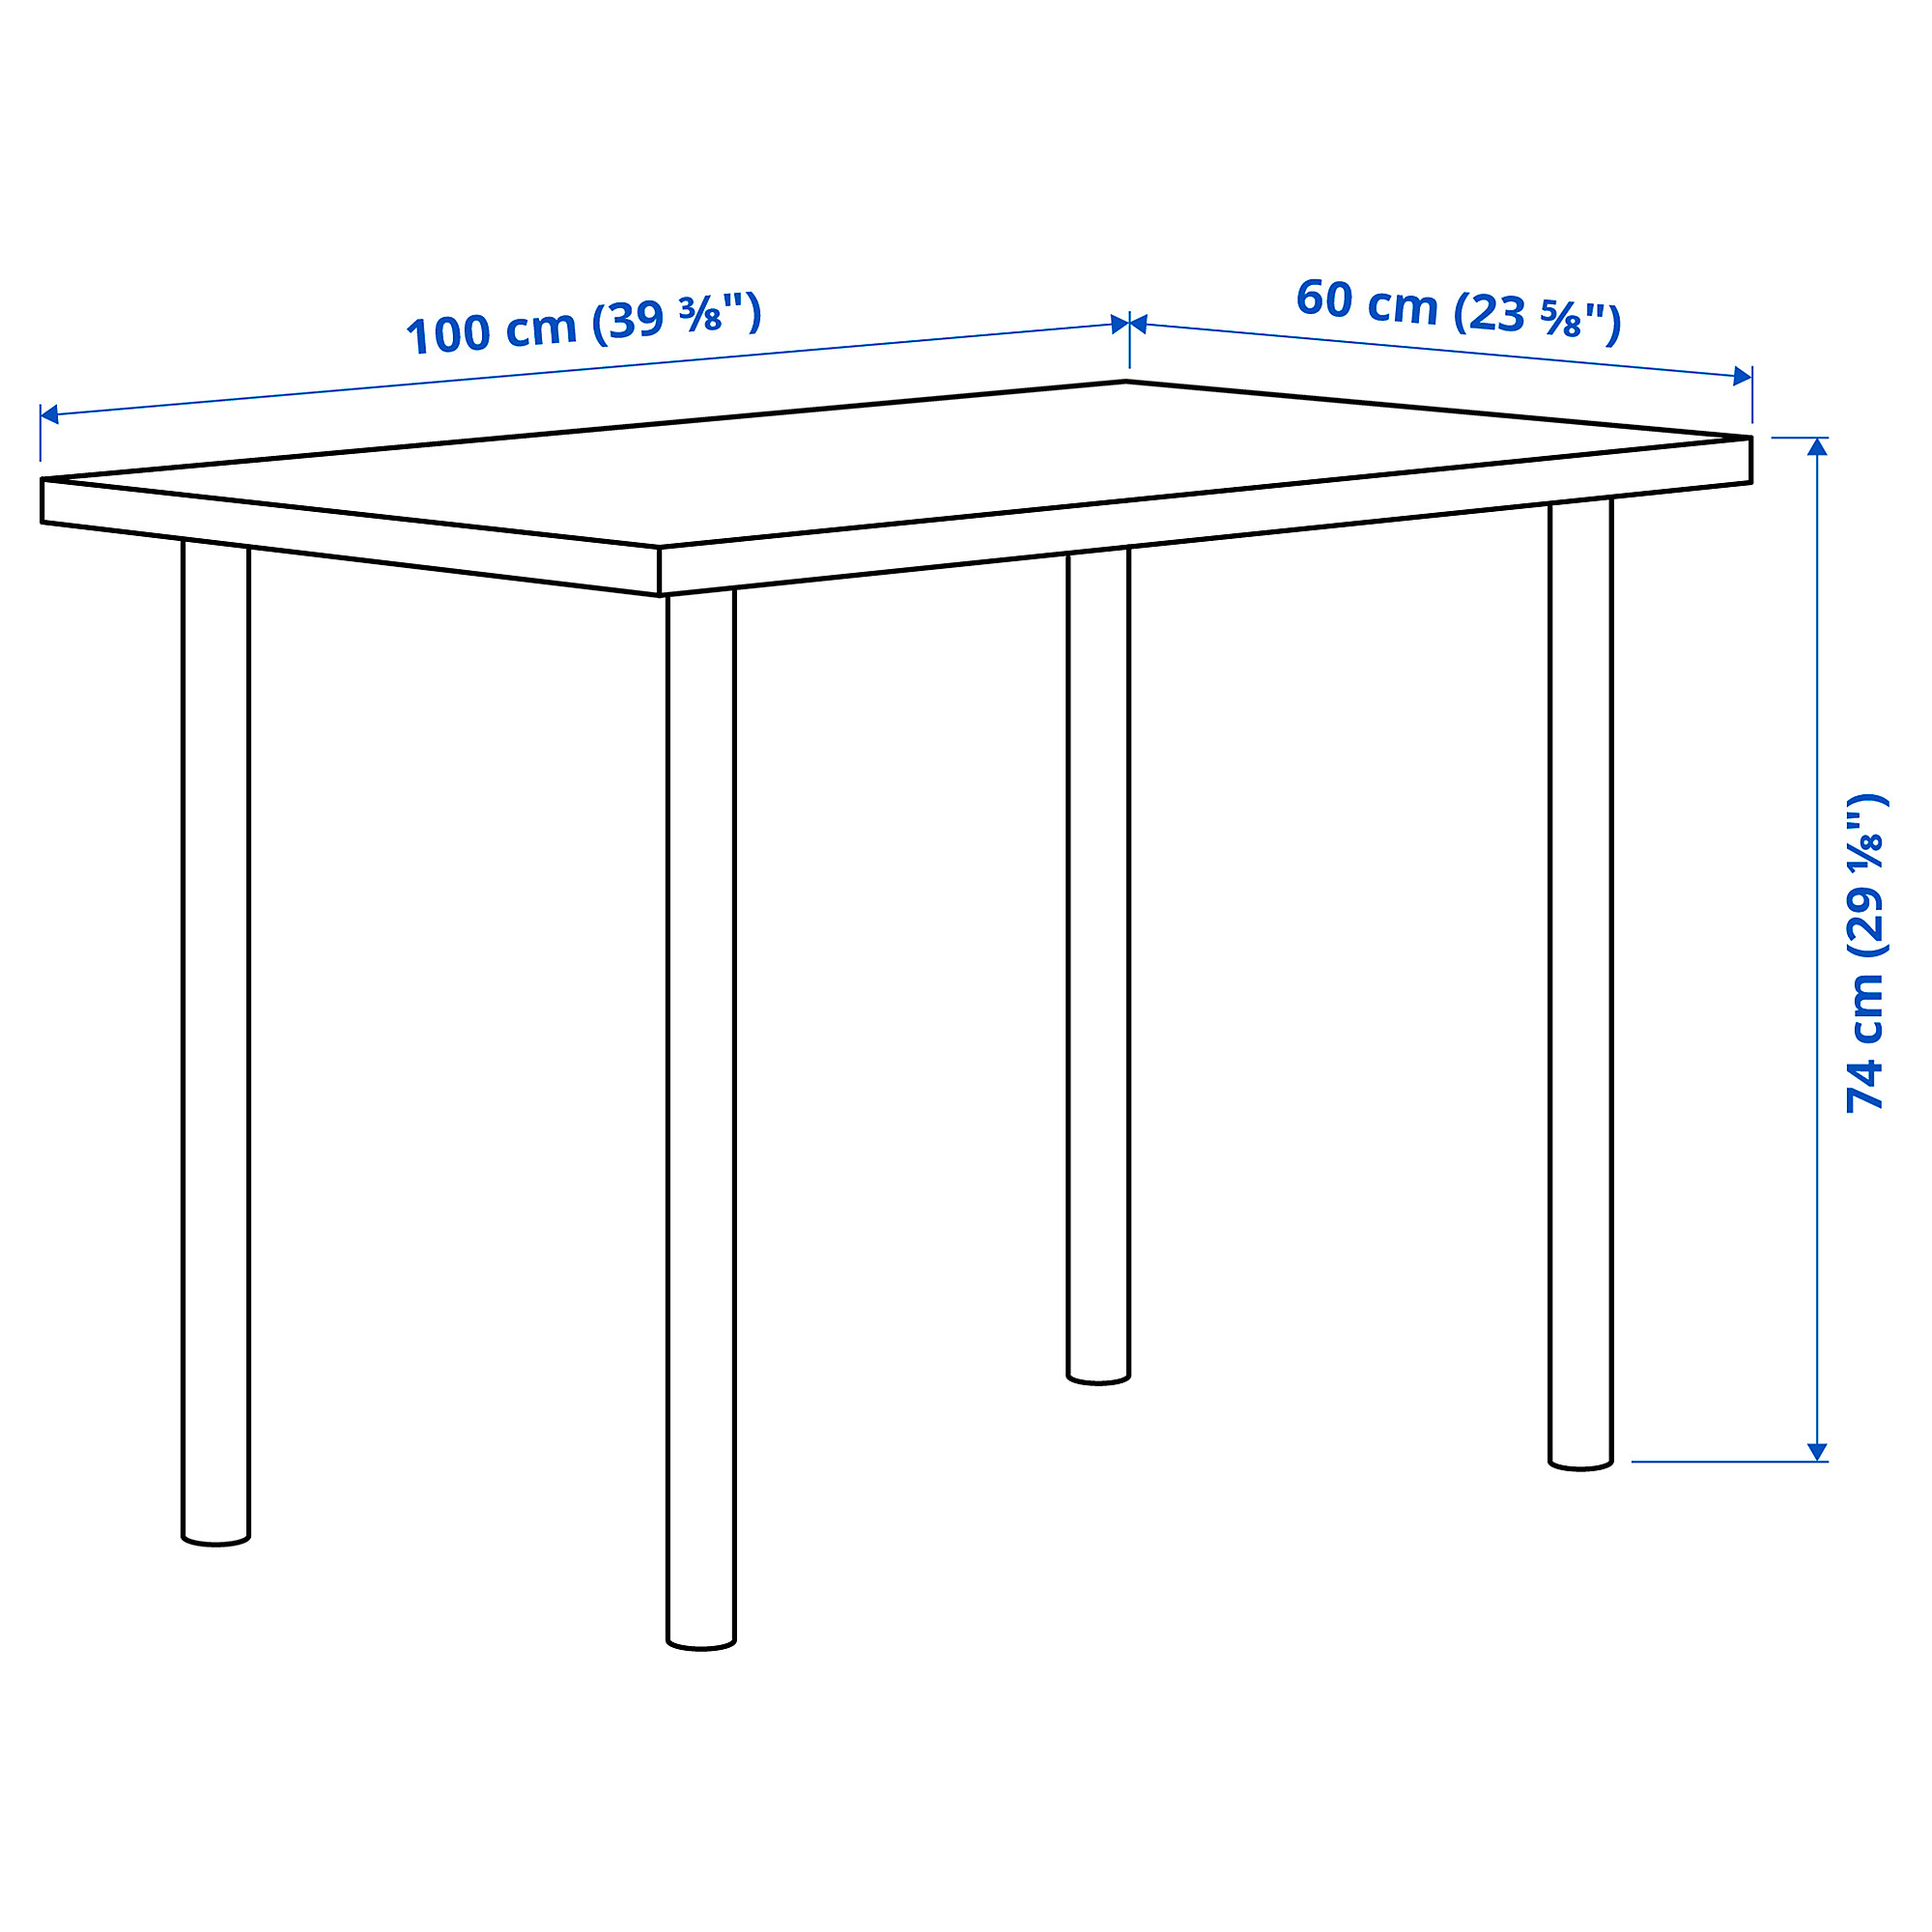 LINNMON/ADILS table